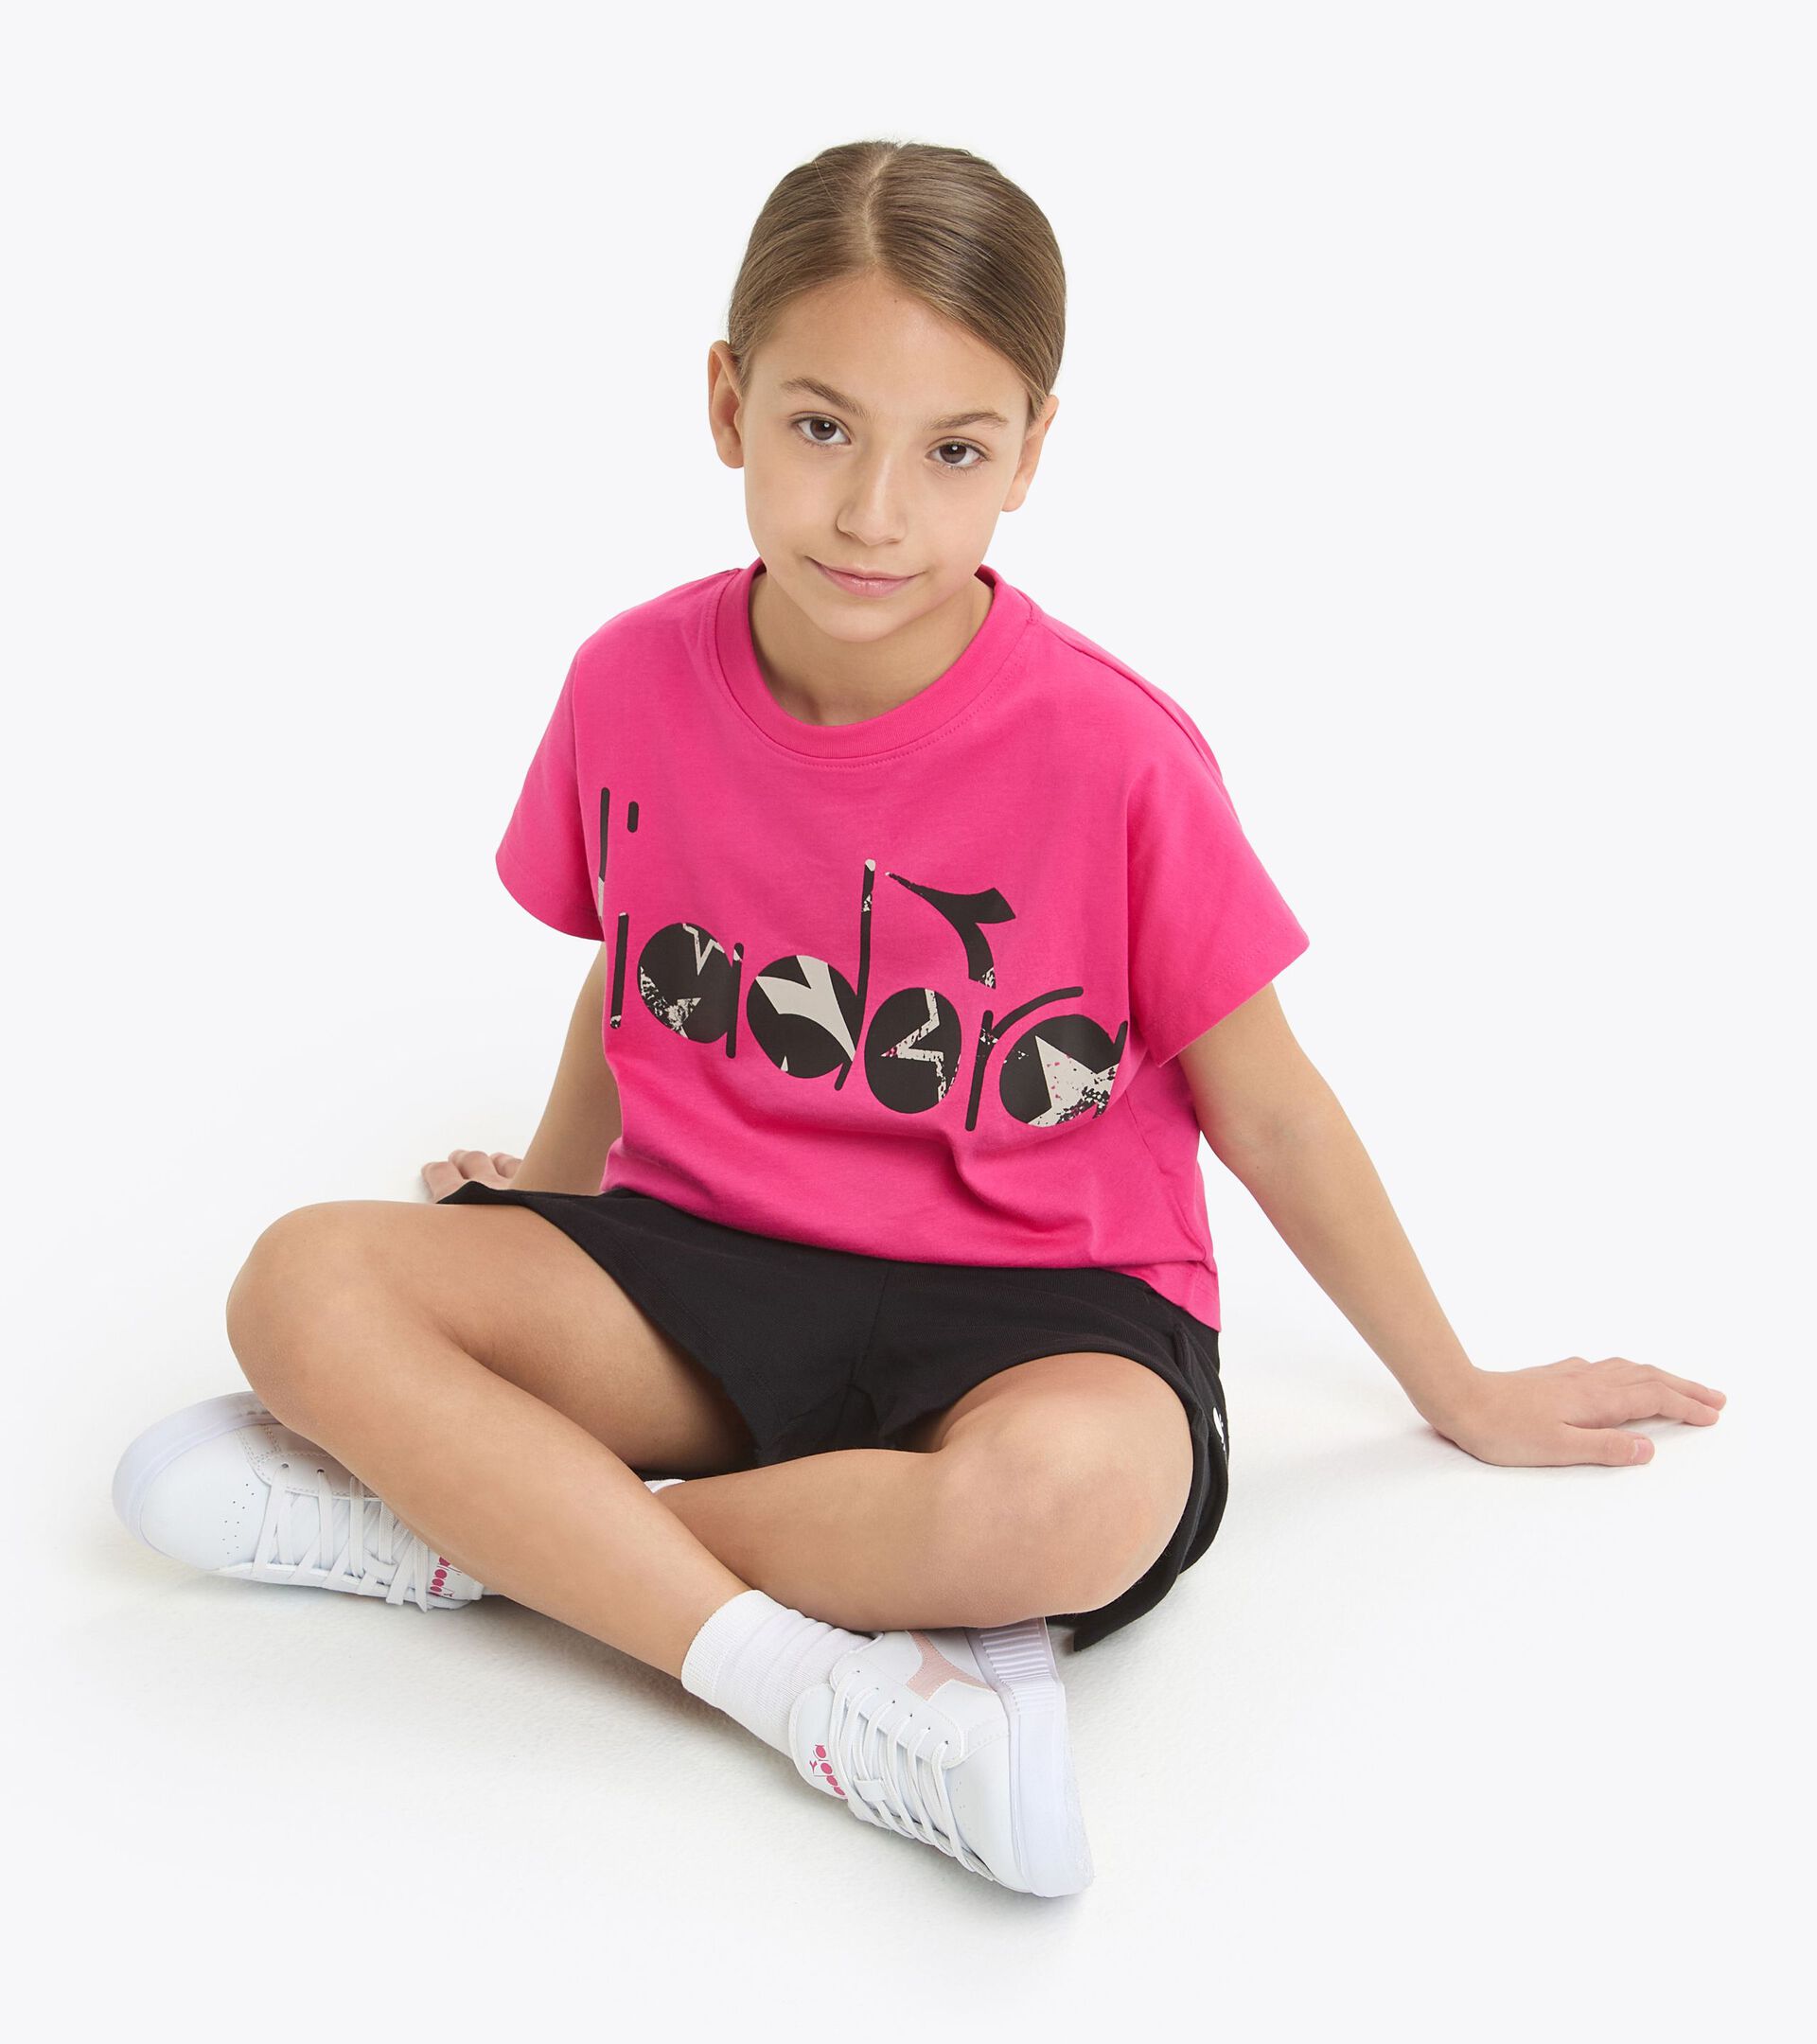 Cropped t-shirt - Boxy fit - Girl
 JG. T-SHIRT STARS BOUGANVILLE PINK - Diadora